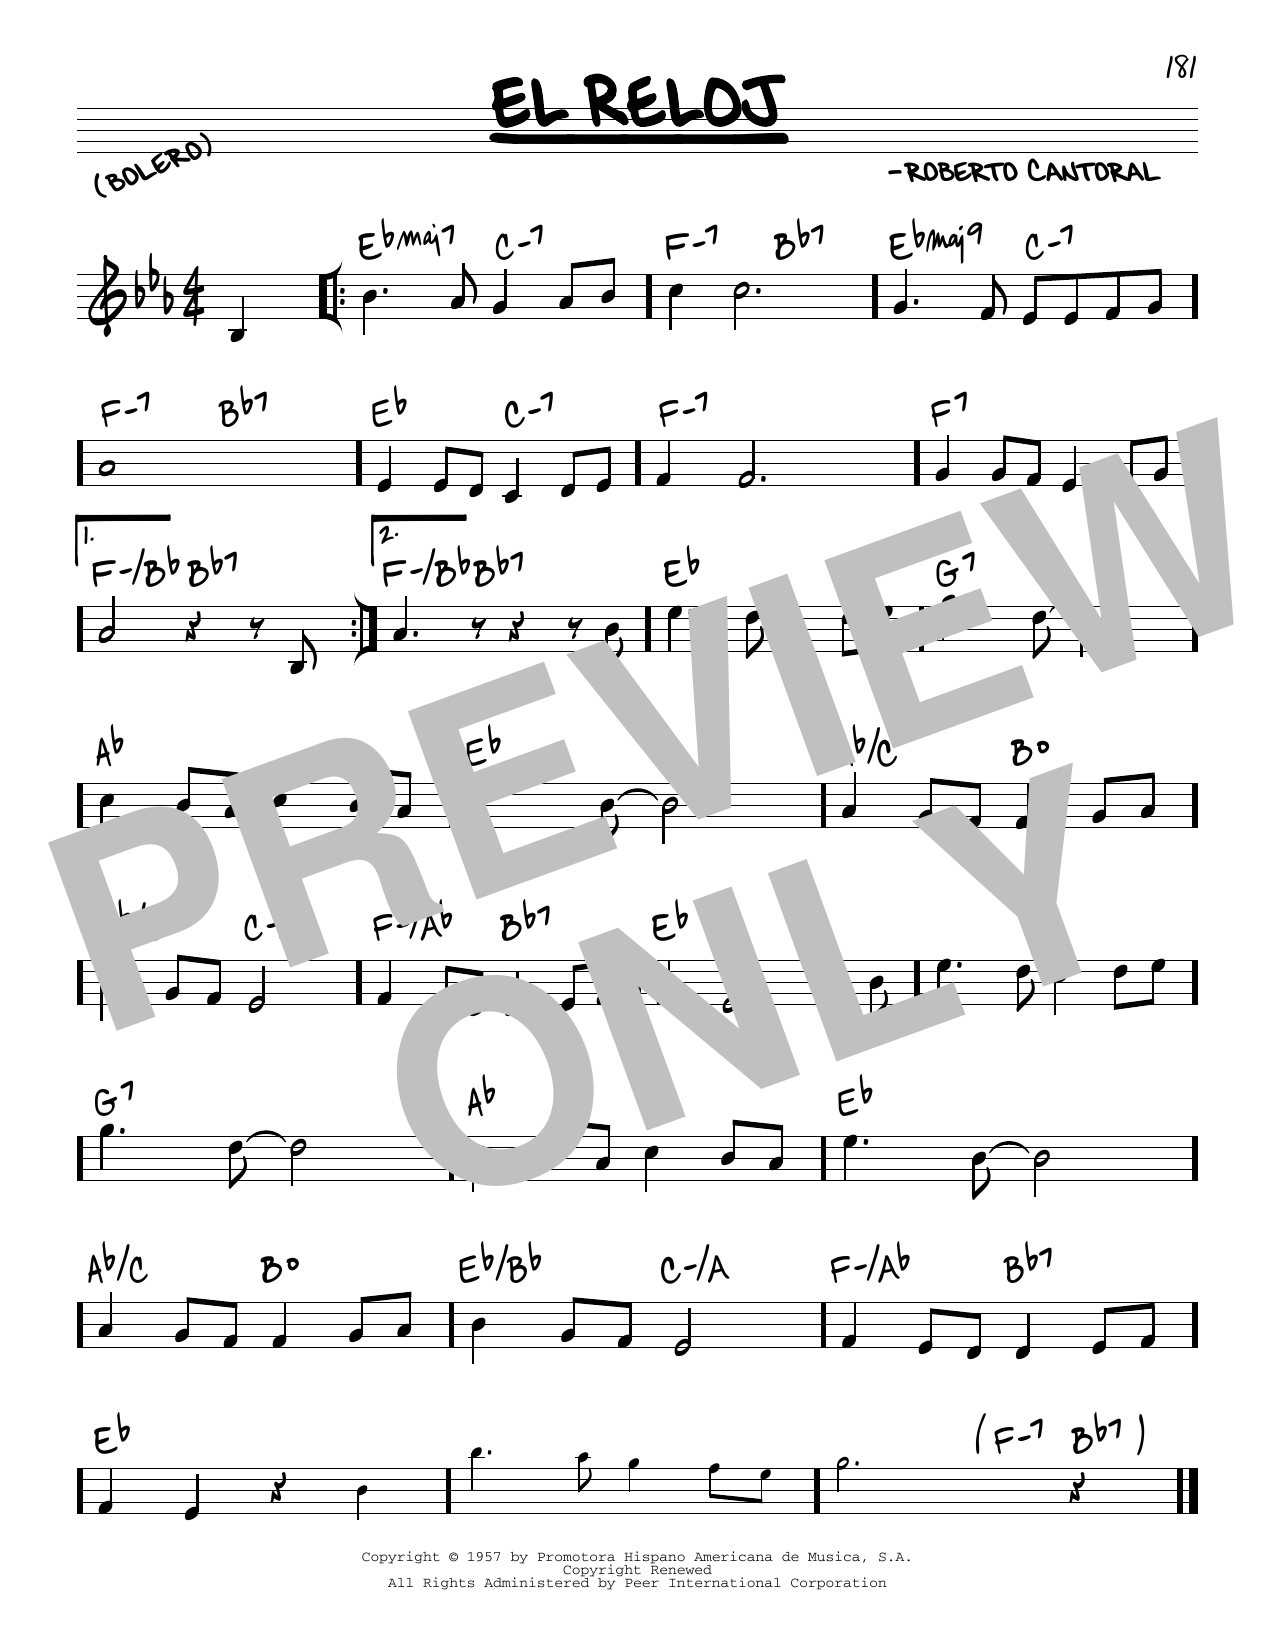 Roberto Cantoral El Reloj Sheet Music Notes & Chords for Real Book – Melody & Chords - Download or Print PDF